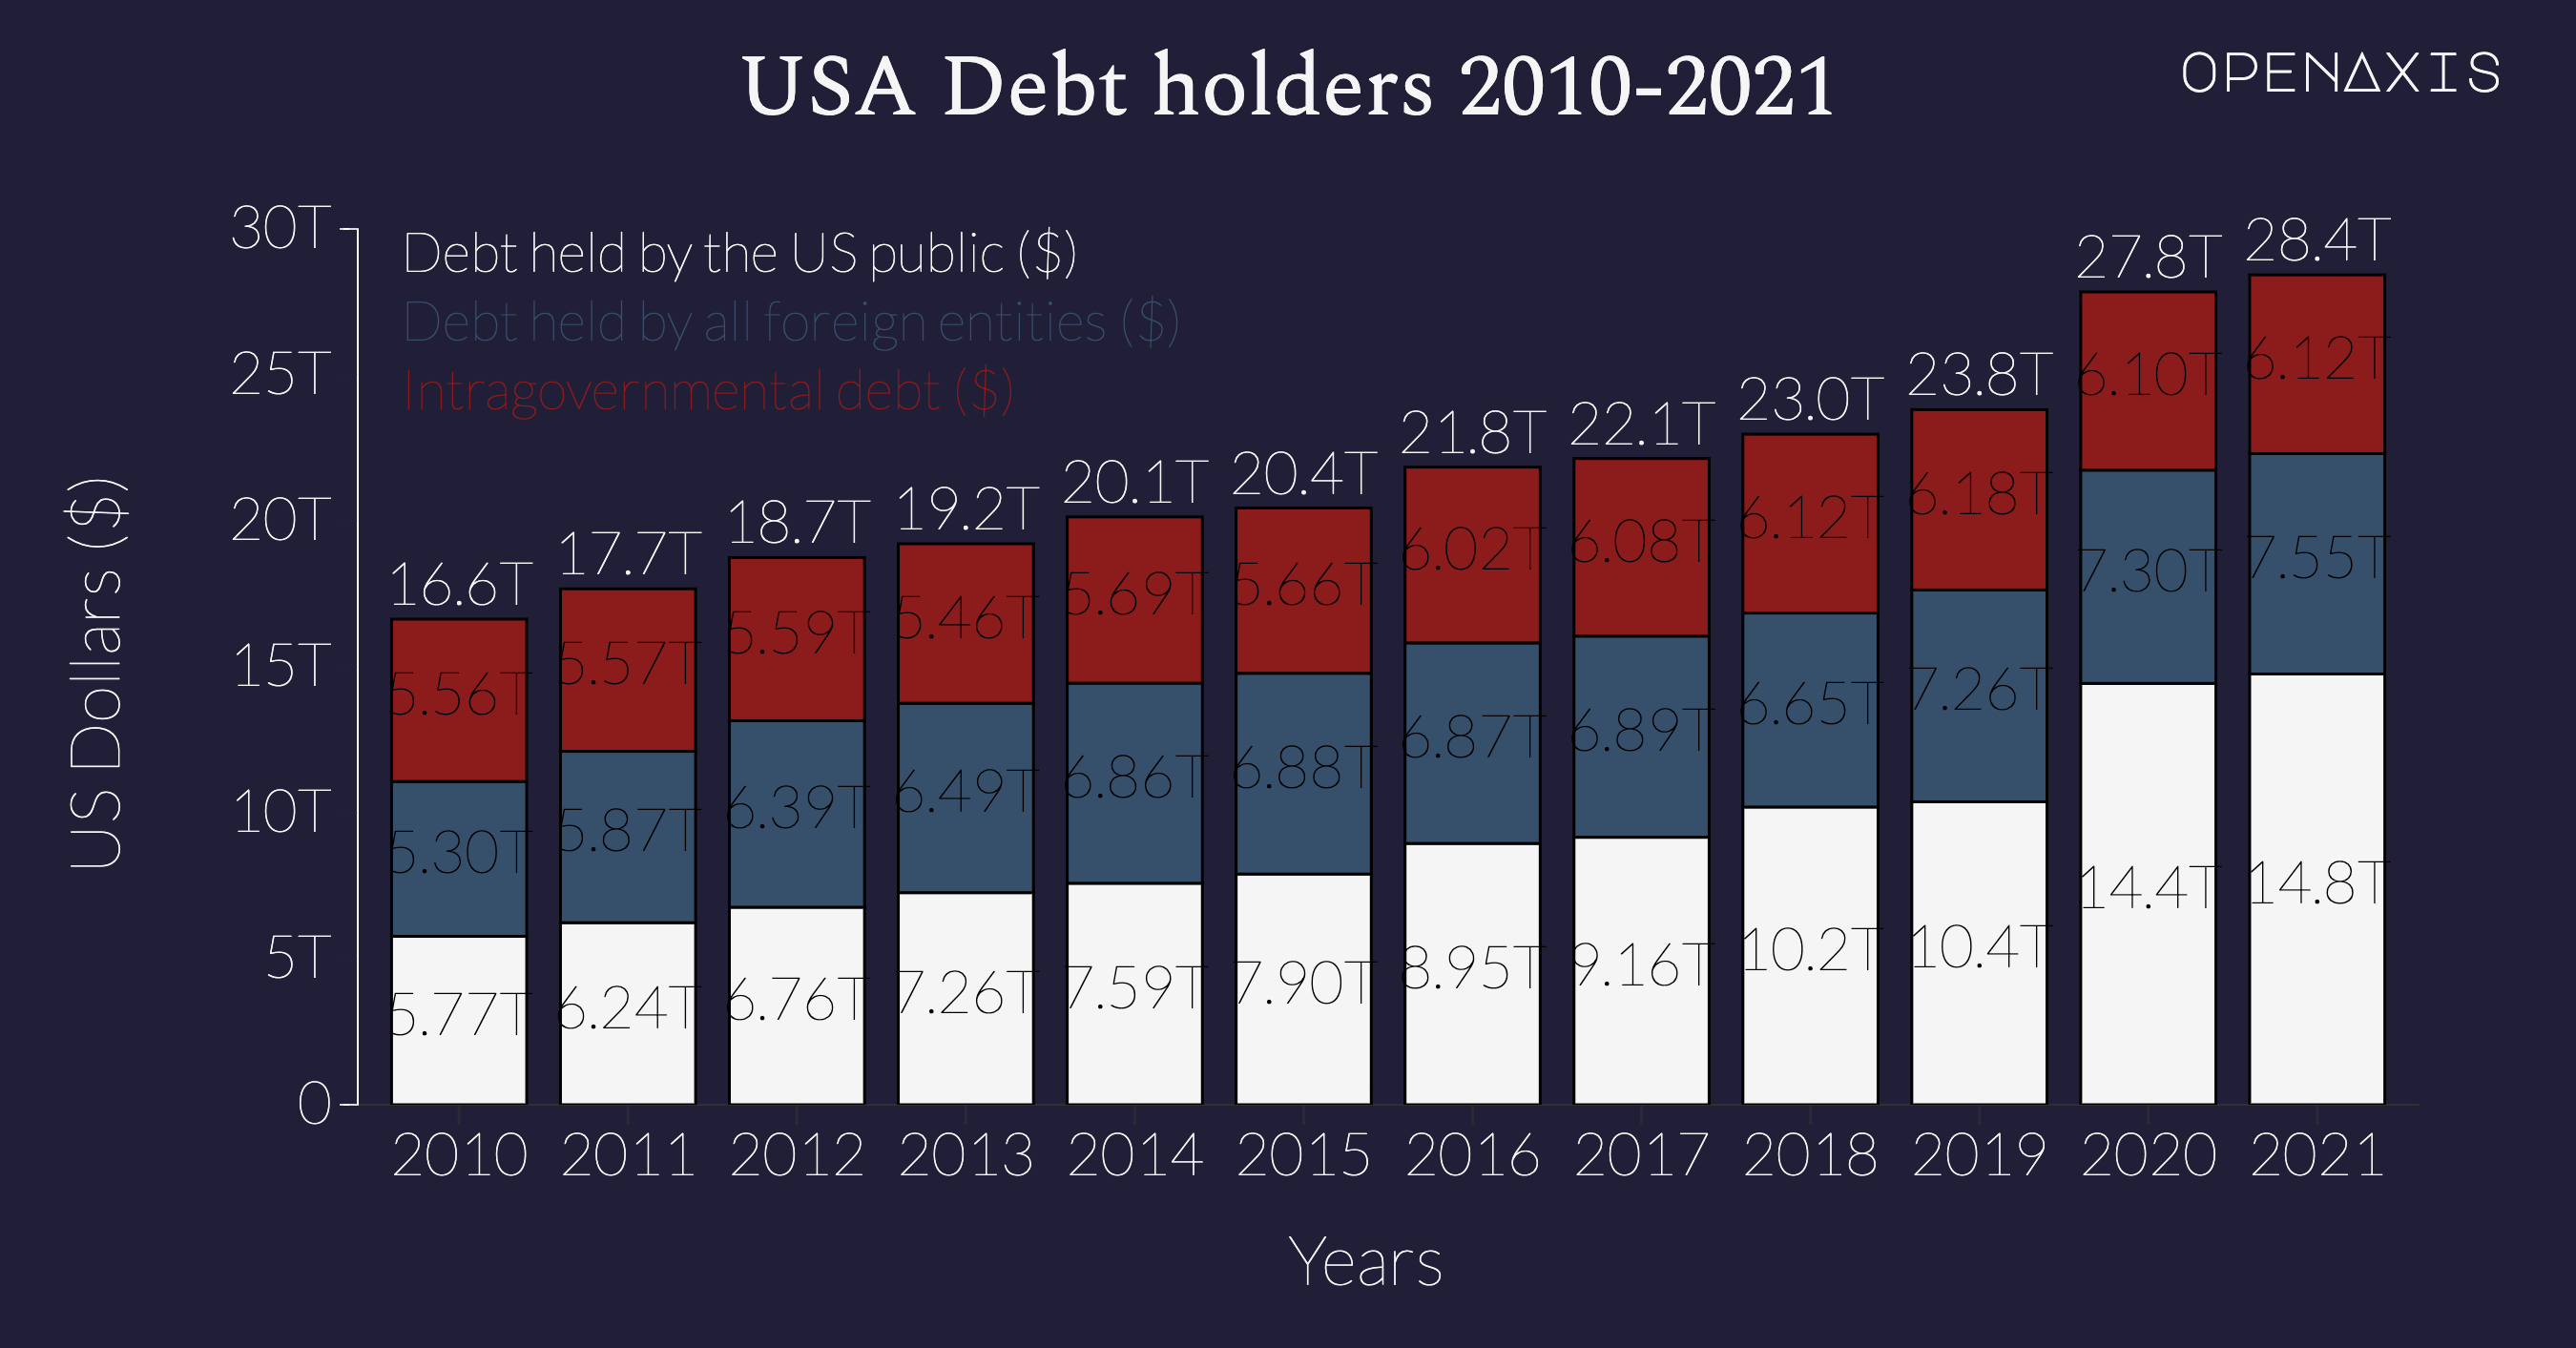 "USA Debt holders 2010-2021"